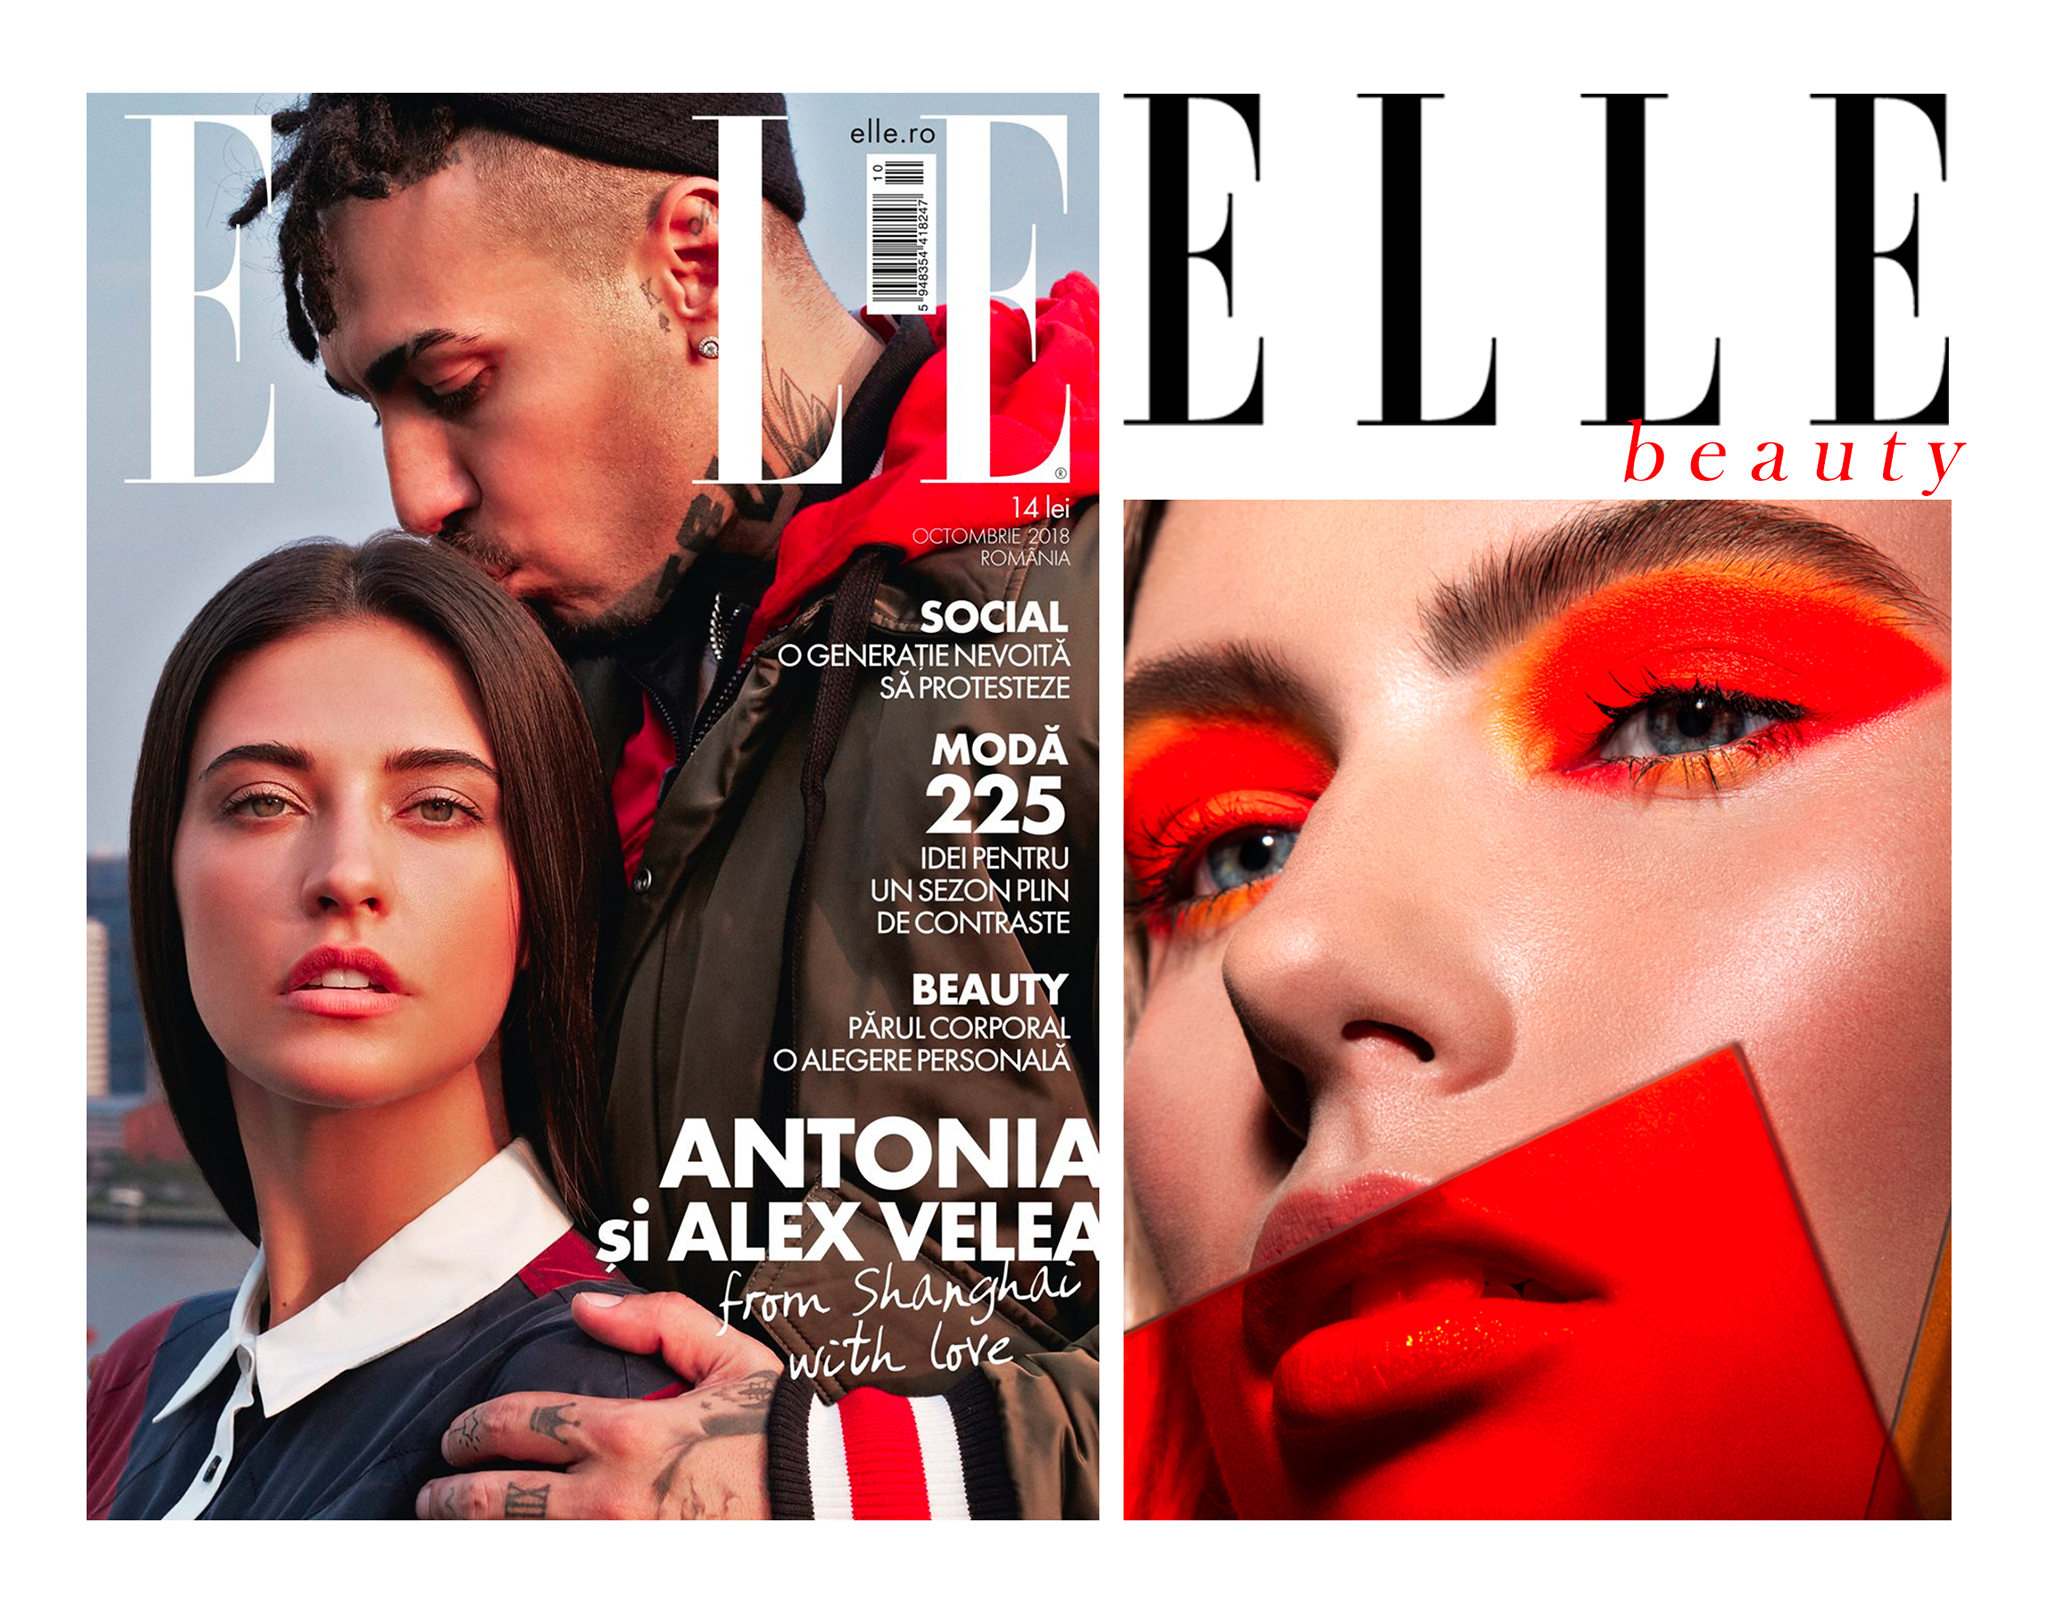 Elle Magazine, Romania's October 2018 Edition featuring OYG BIV by Antonio Martez